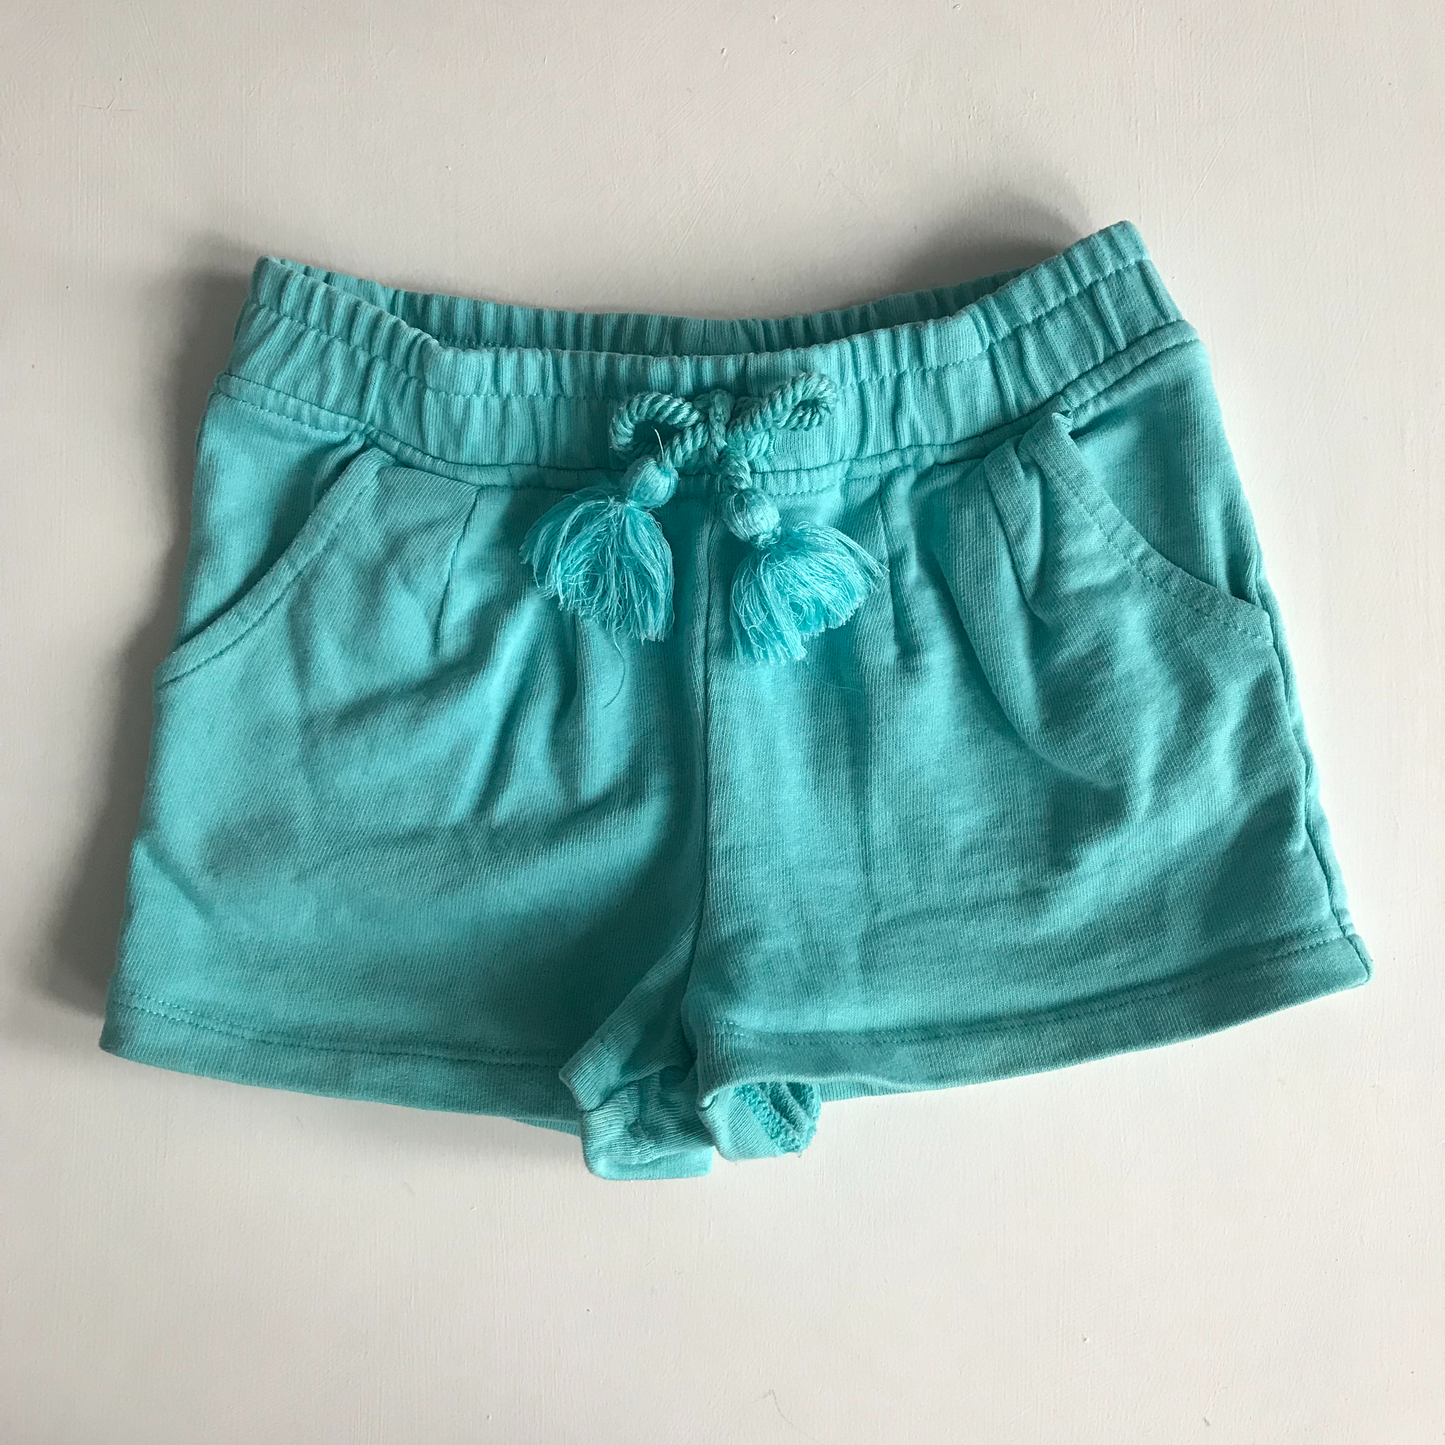 Shorts - Light Blue - Age 4